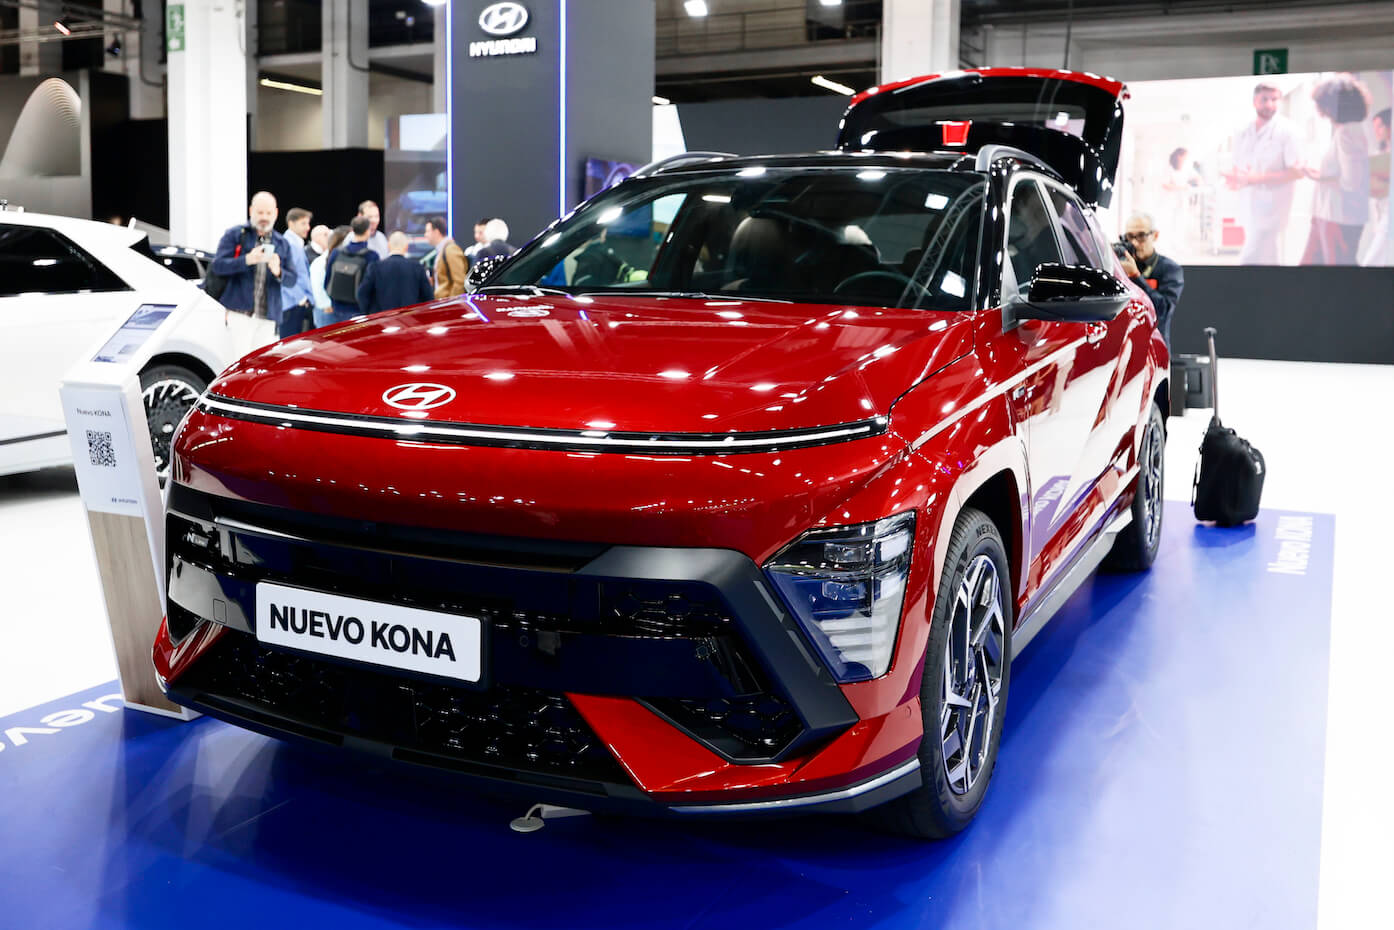 The all-new Hyundai Kona exhibited during the Automobile Barcelona International Motor Show. Hyundai Kona sales are impressive.